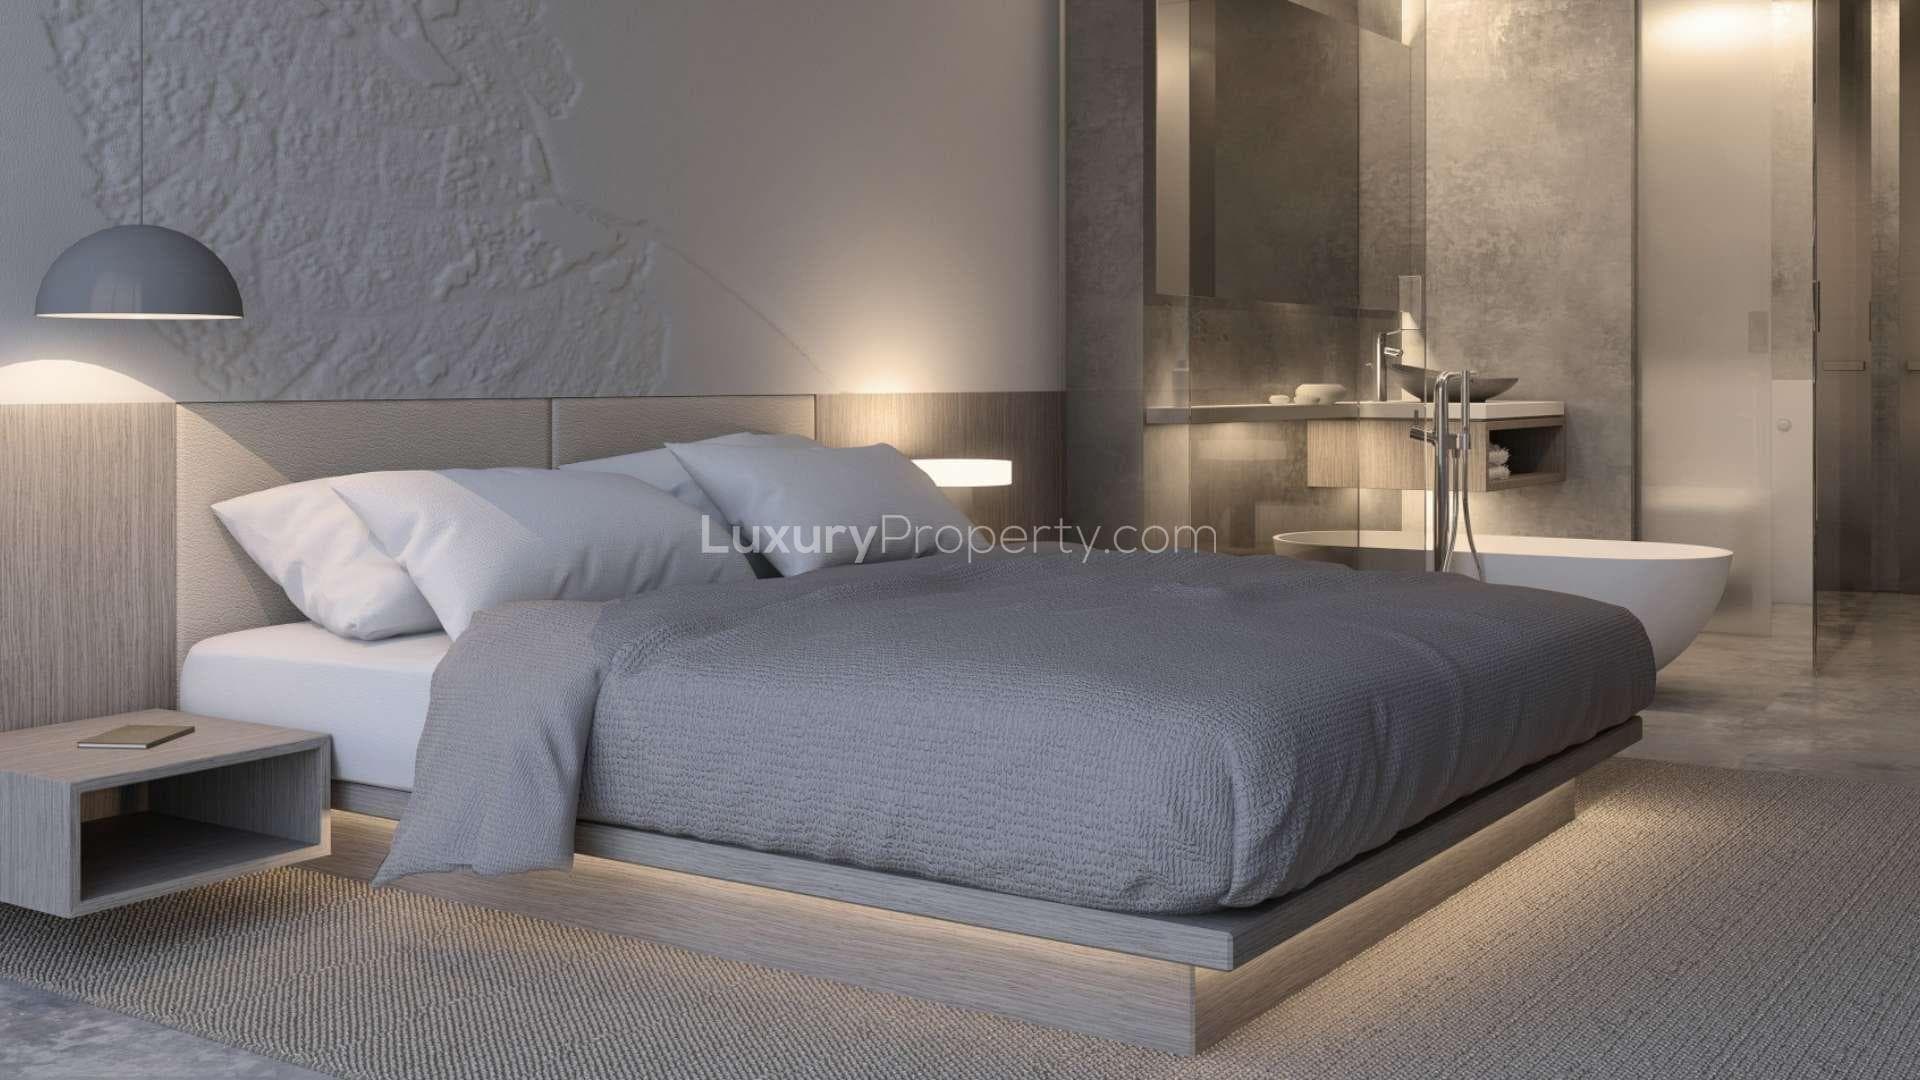 0 Bedroom Apartment For Sale Desert Palm Lp38673 1366a719b2930800.jpg